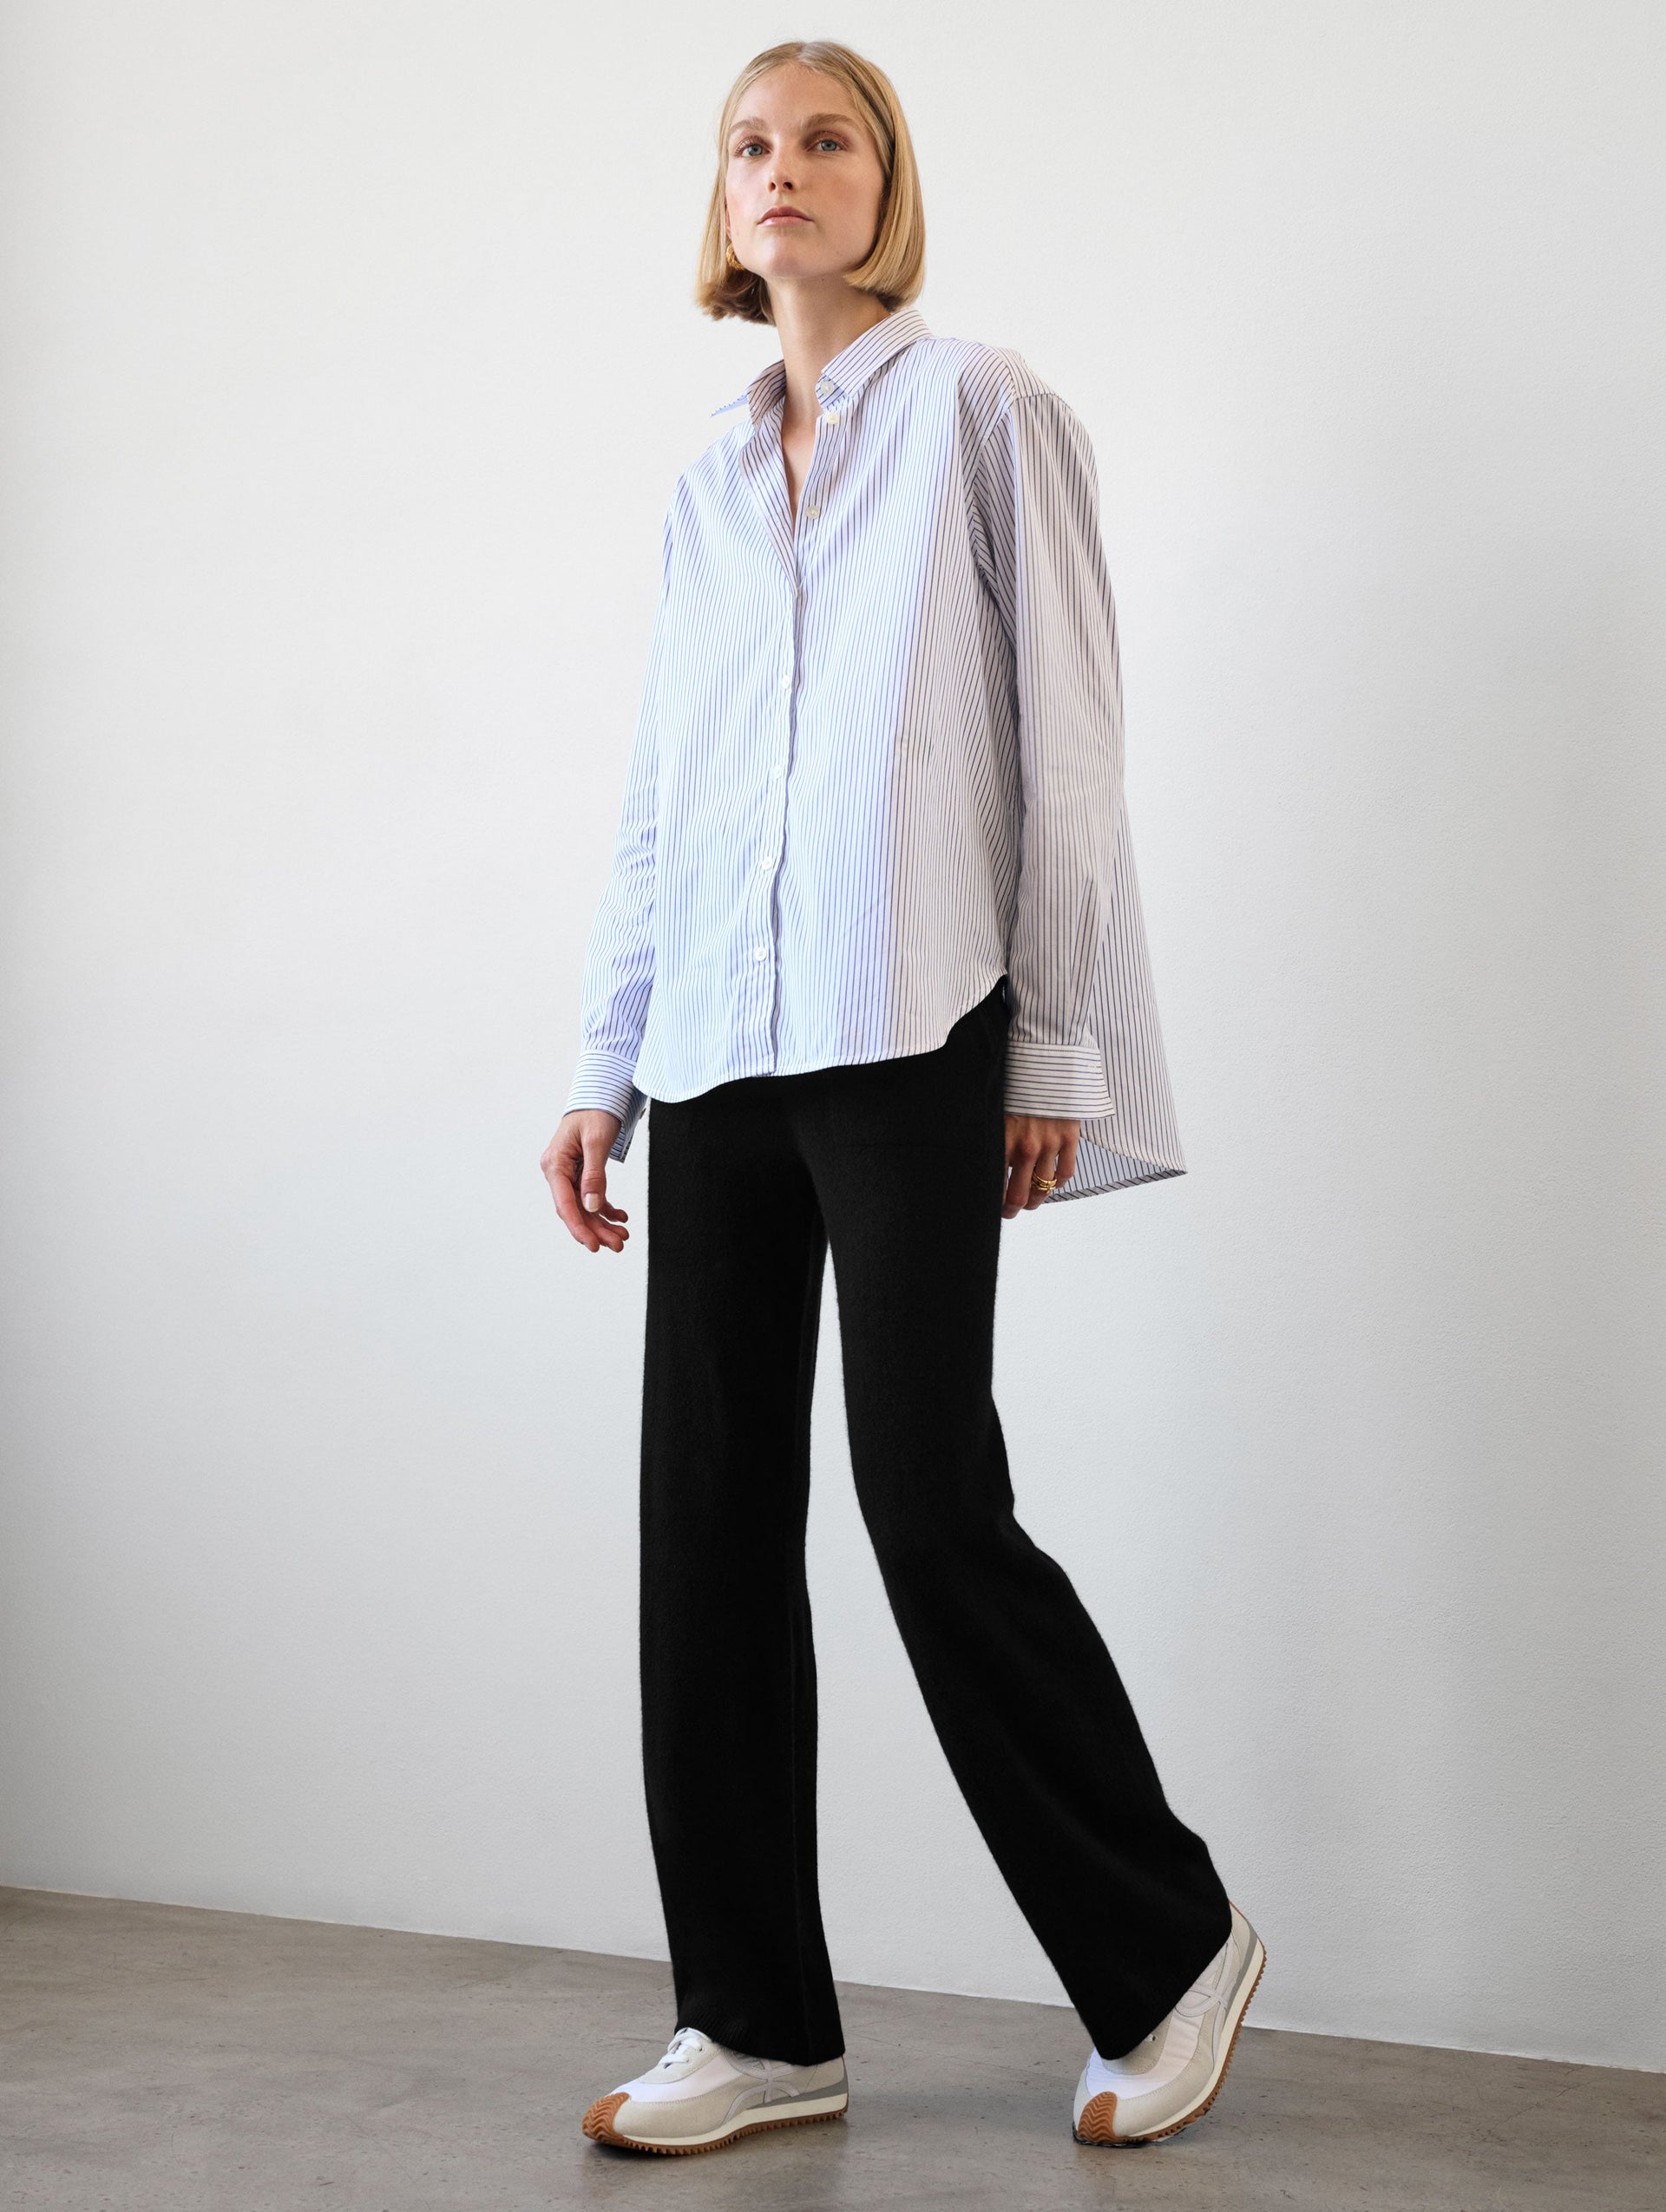 Pants - Cashmere, black & white — Fashion